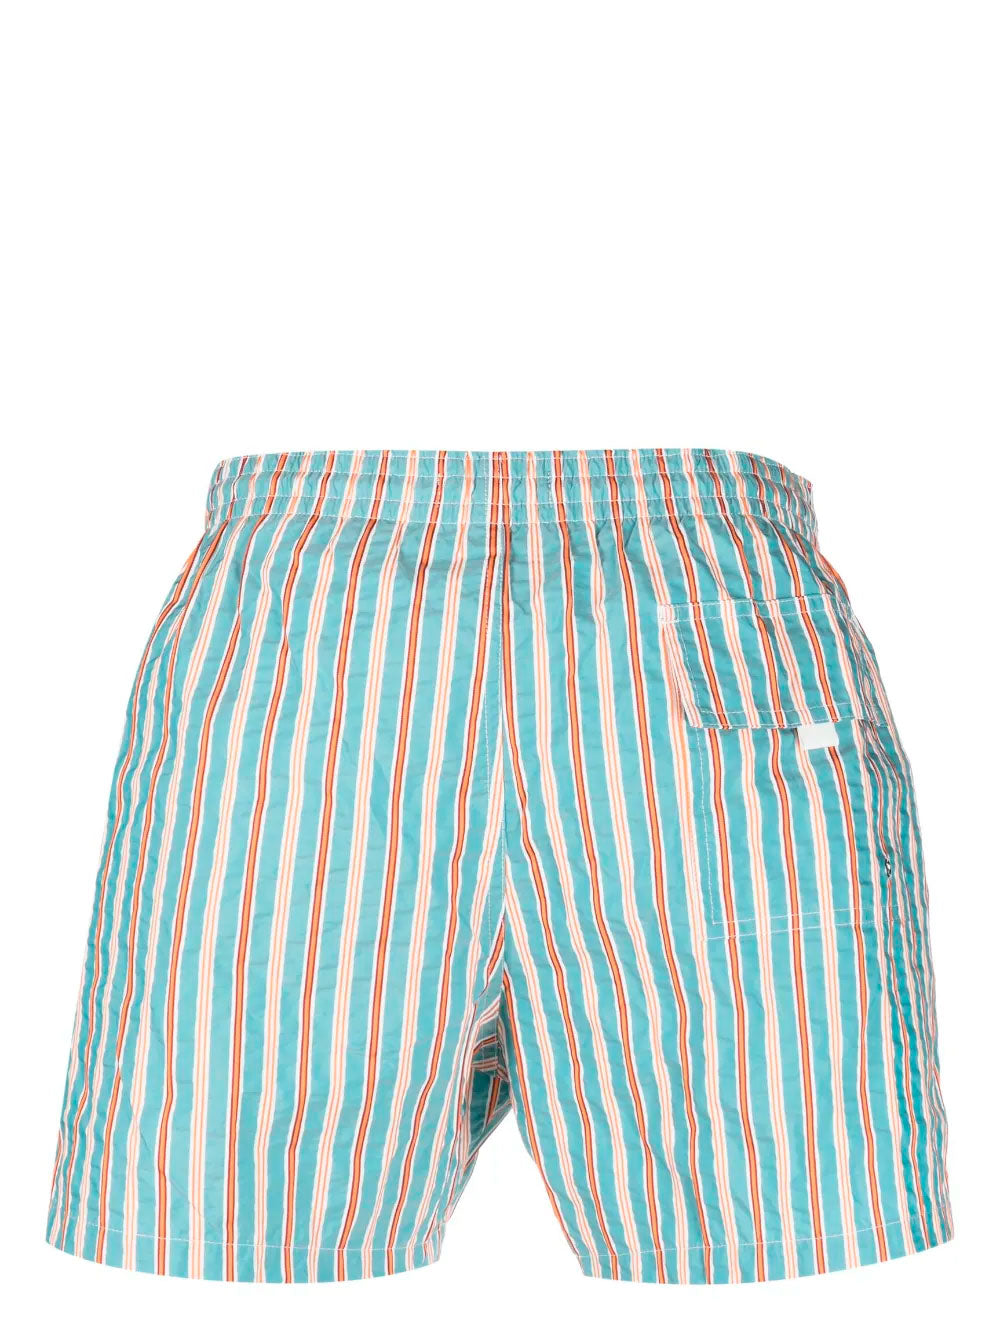 Striped swimming shorts